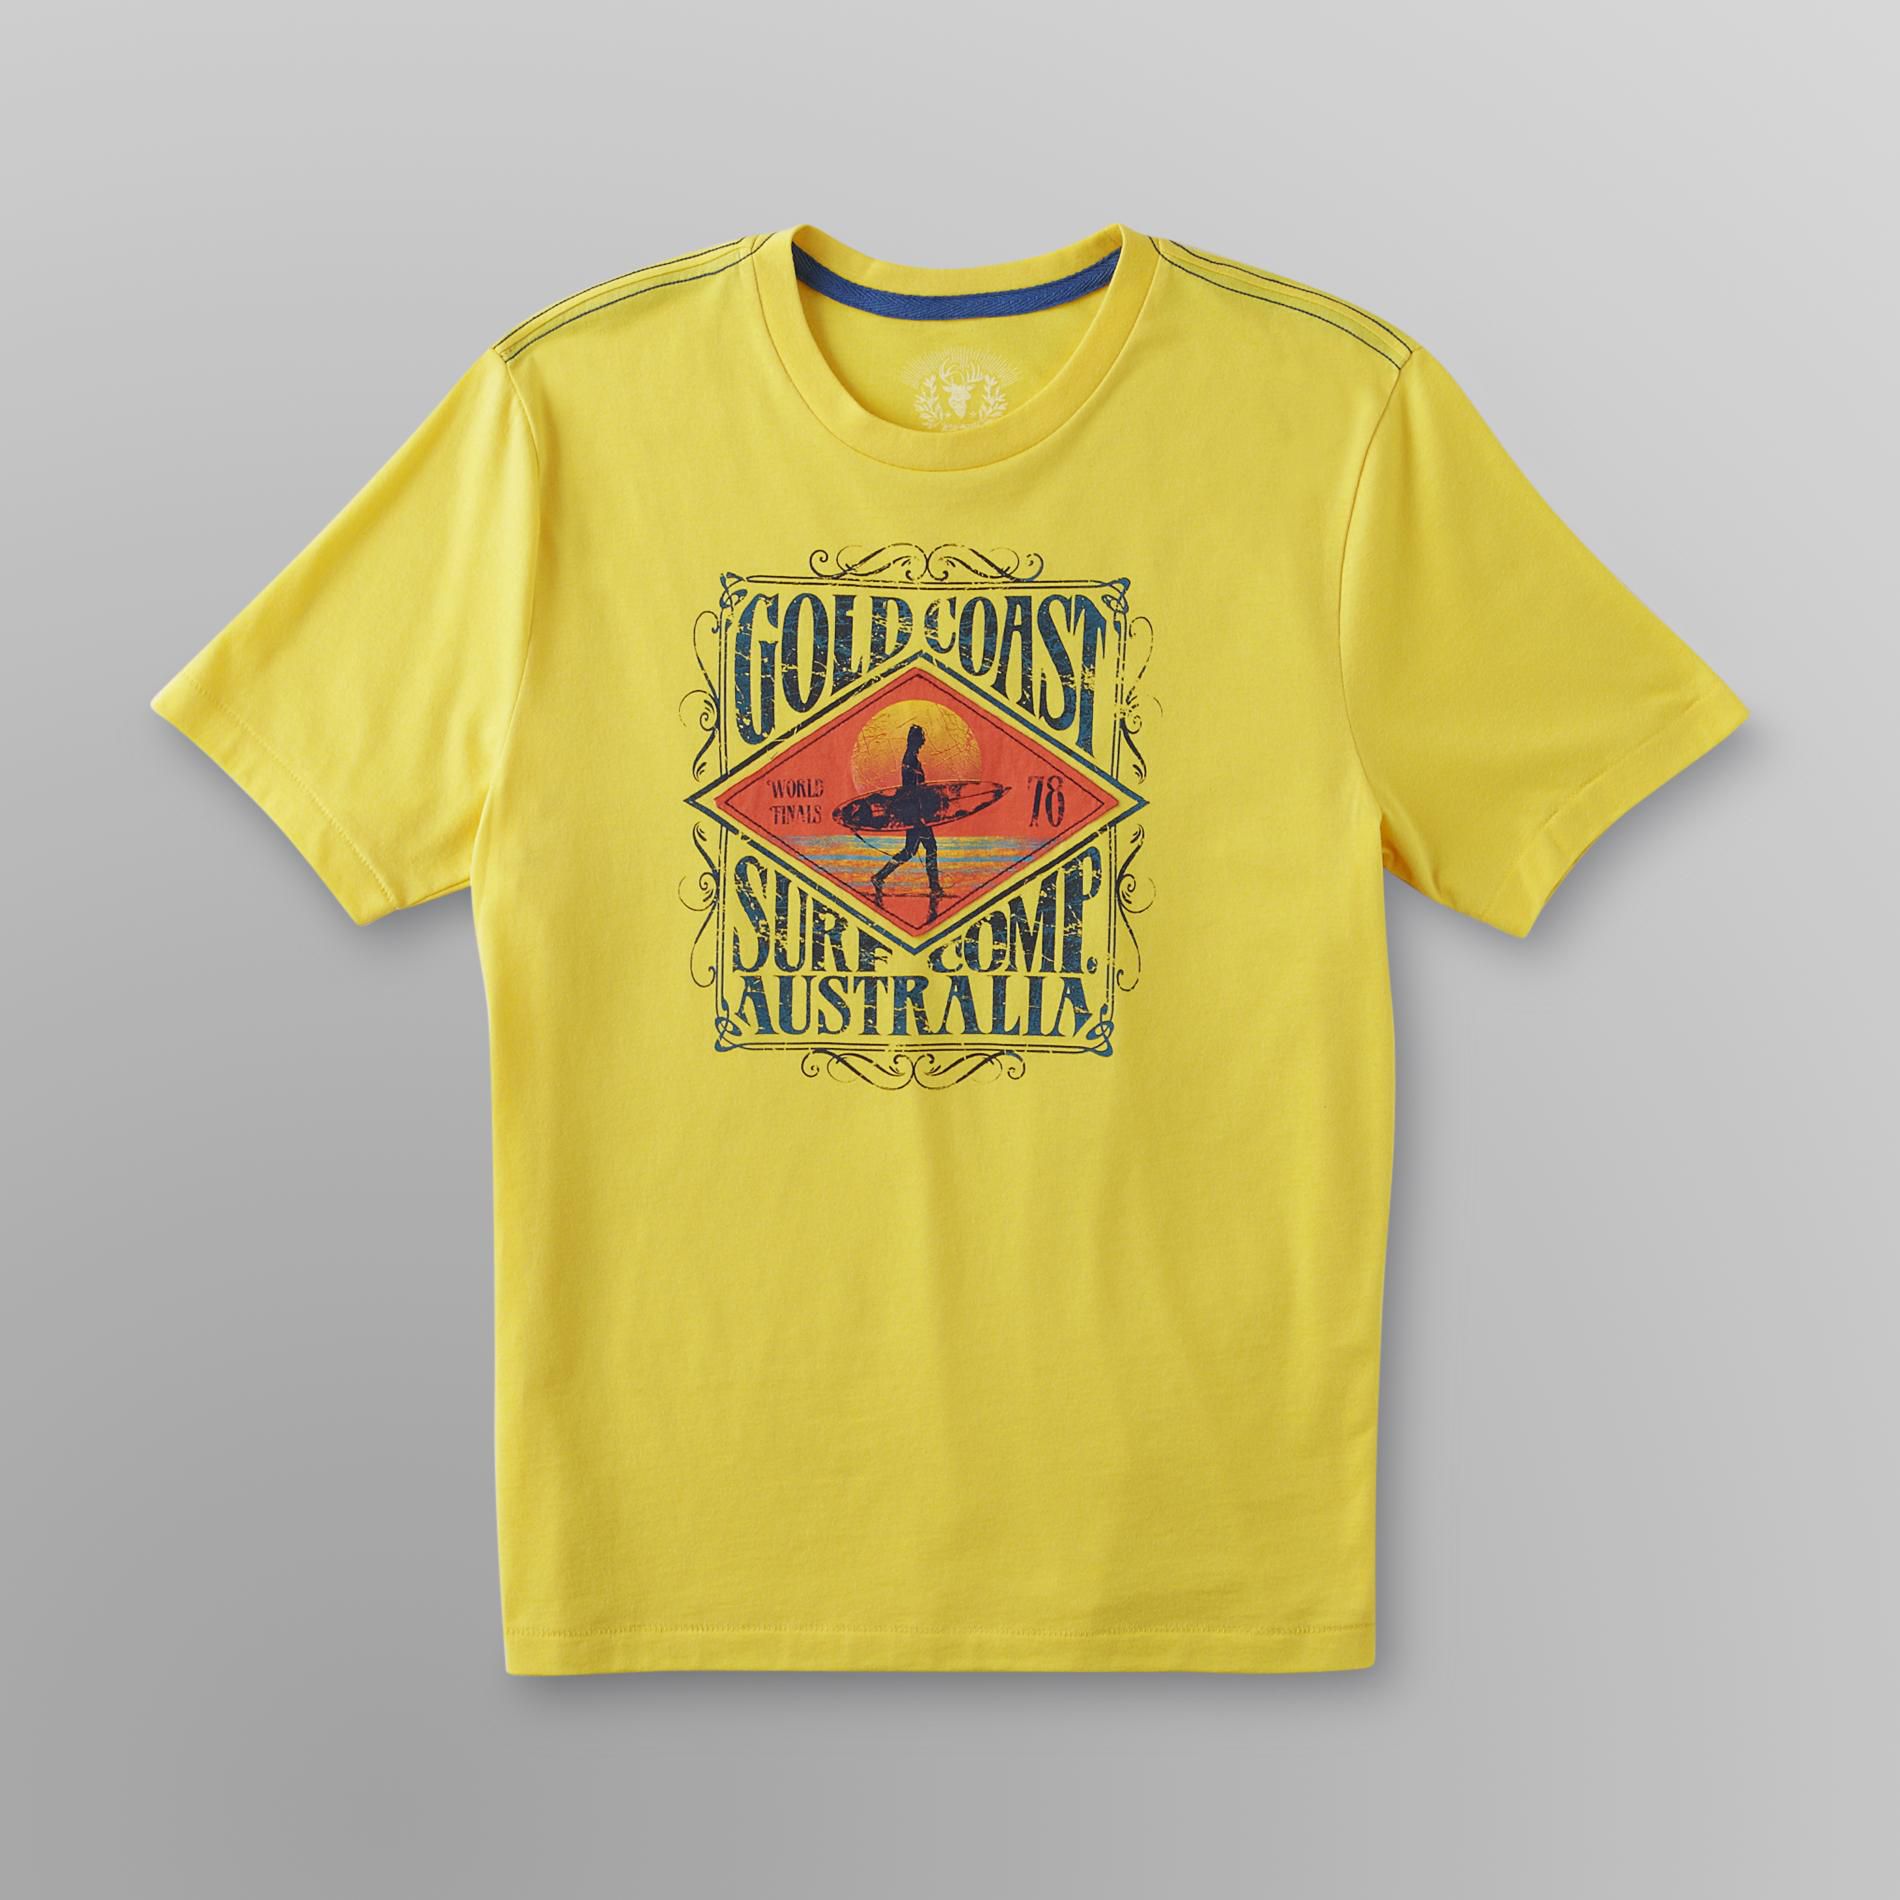 Roebuck & Co. Young Men's Graphic T-Shirt - Gold Coast